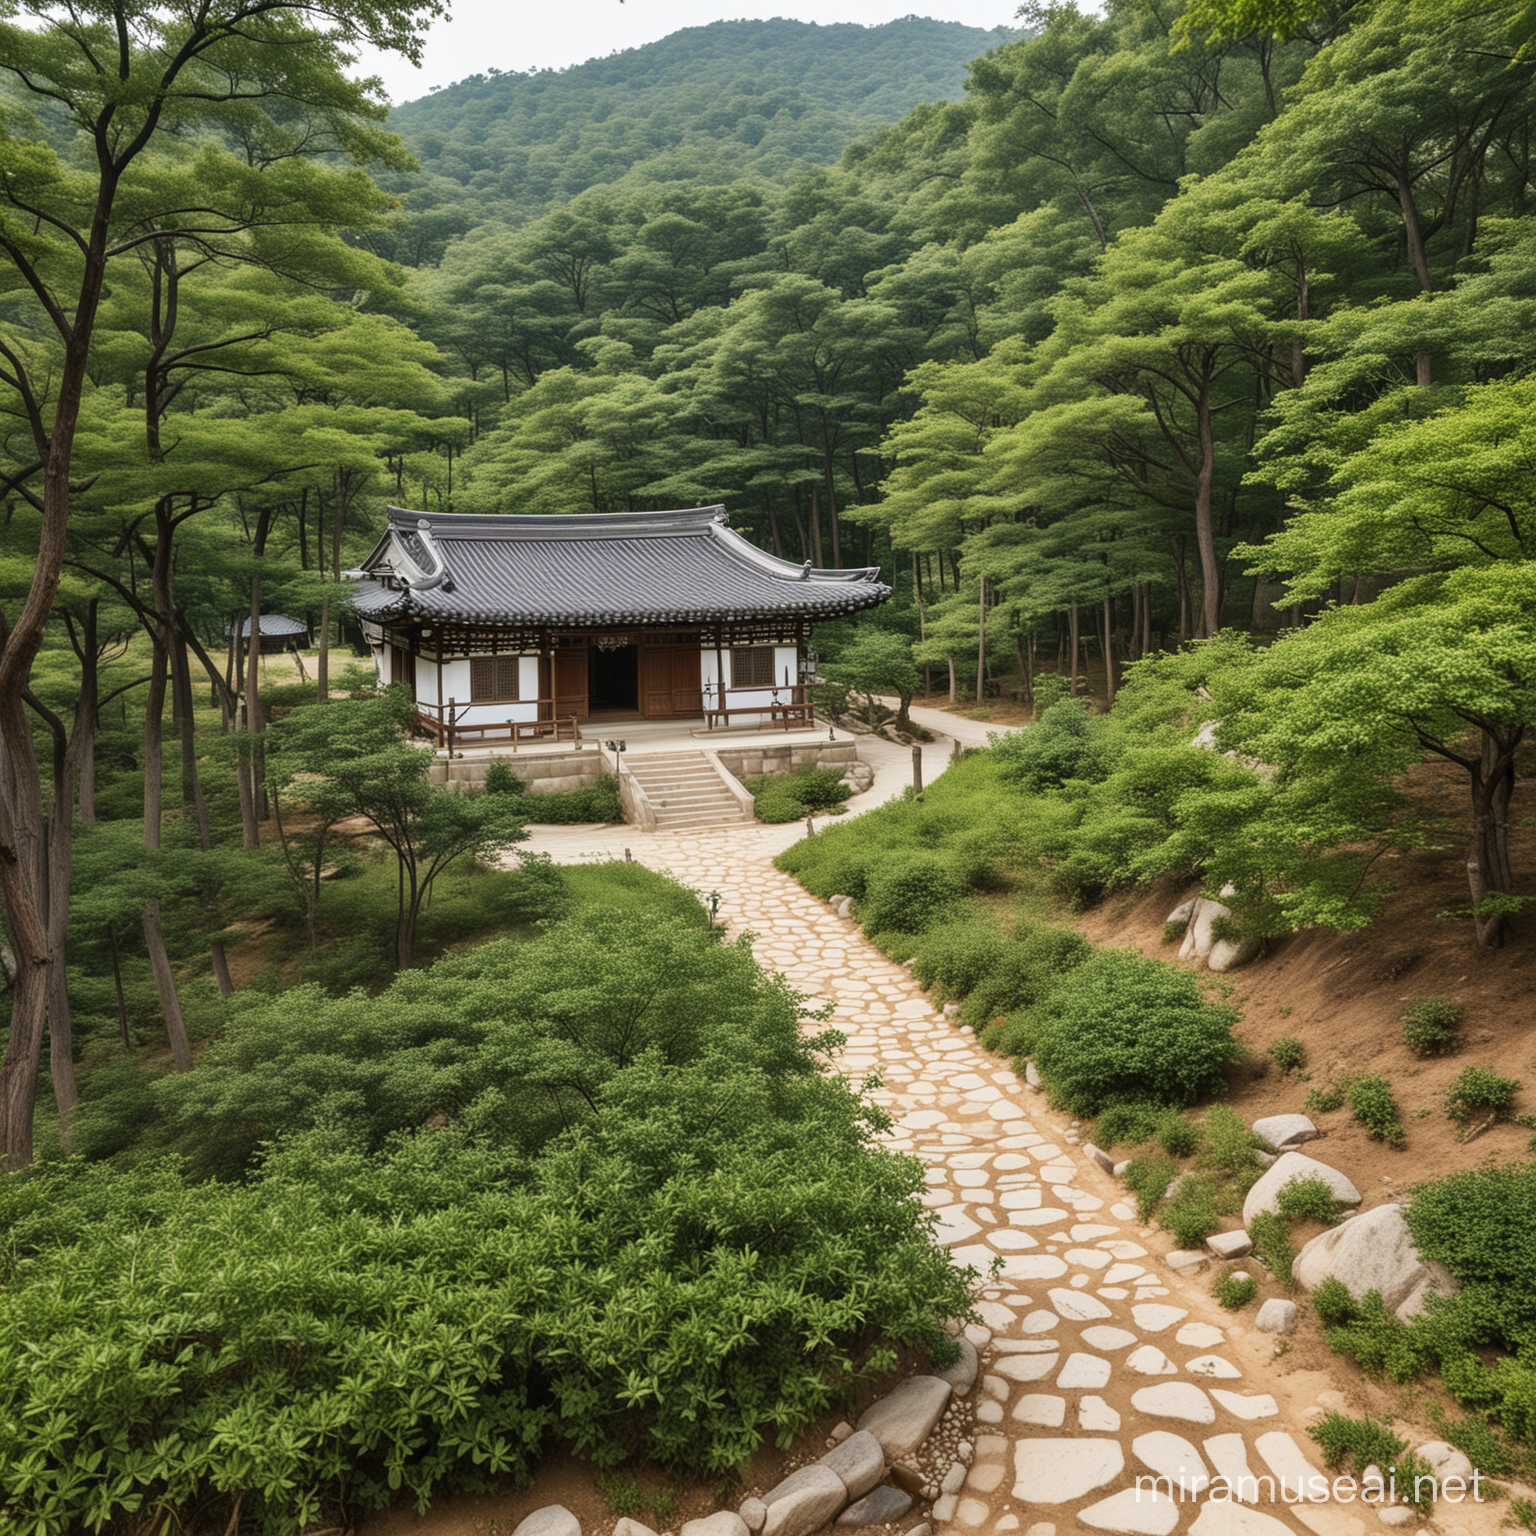 3 Traditional Korean Hanok buildings in a serene forest
